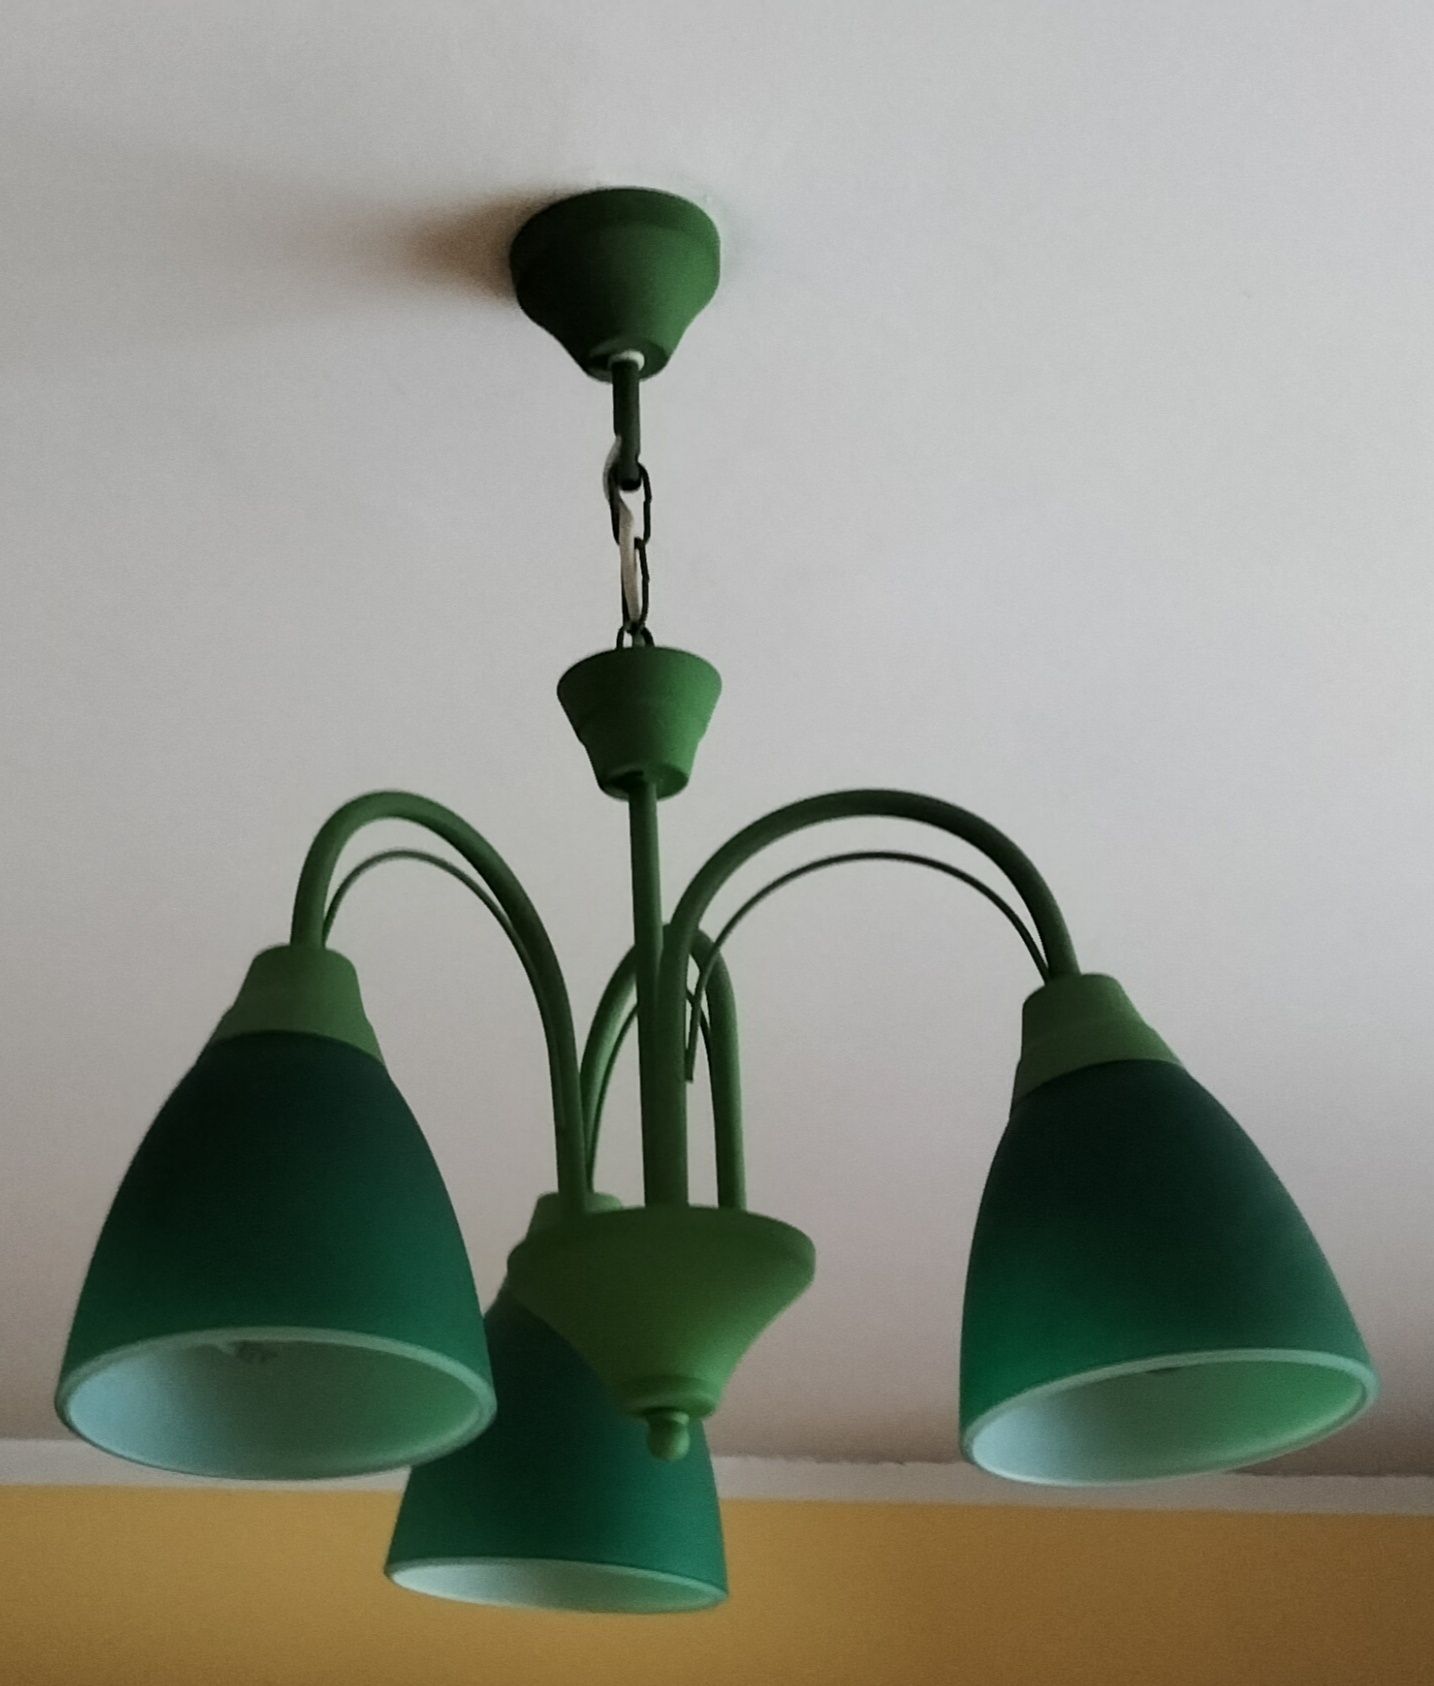 Lampa lampka żyrandol zielona zielony